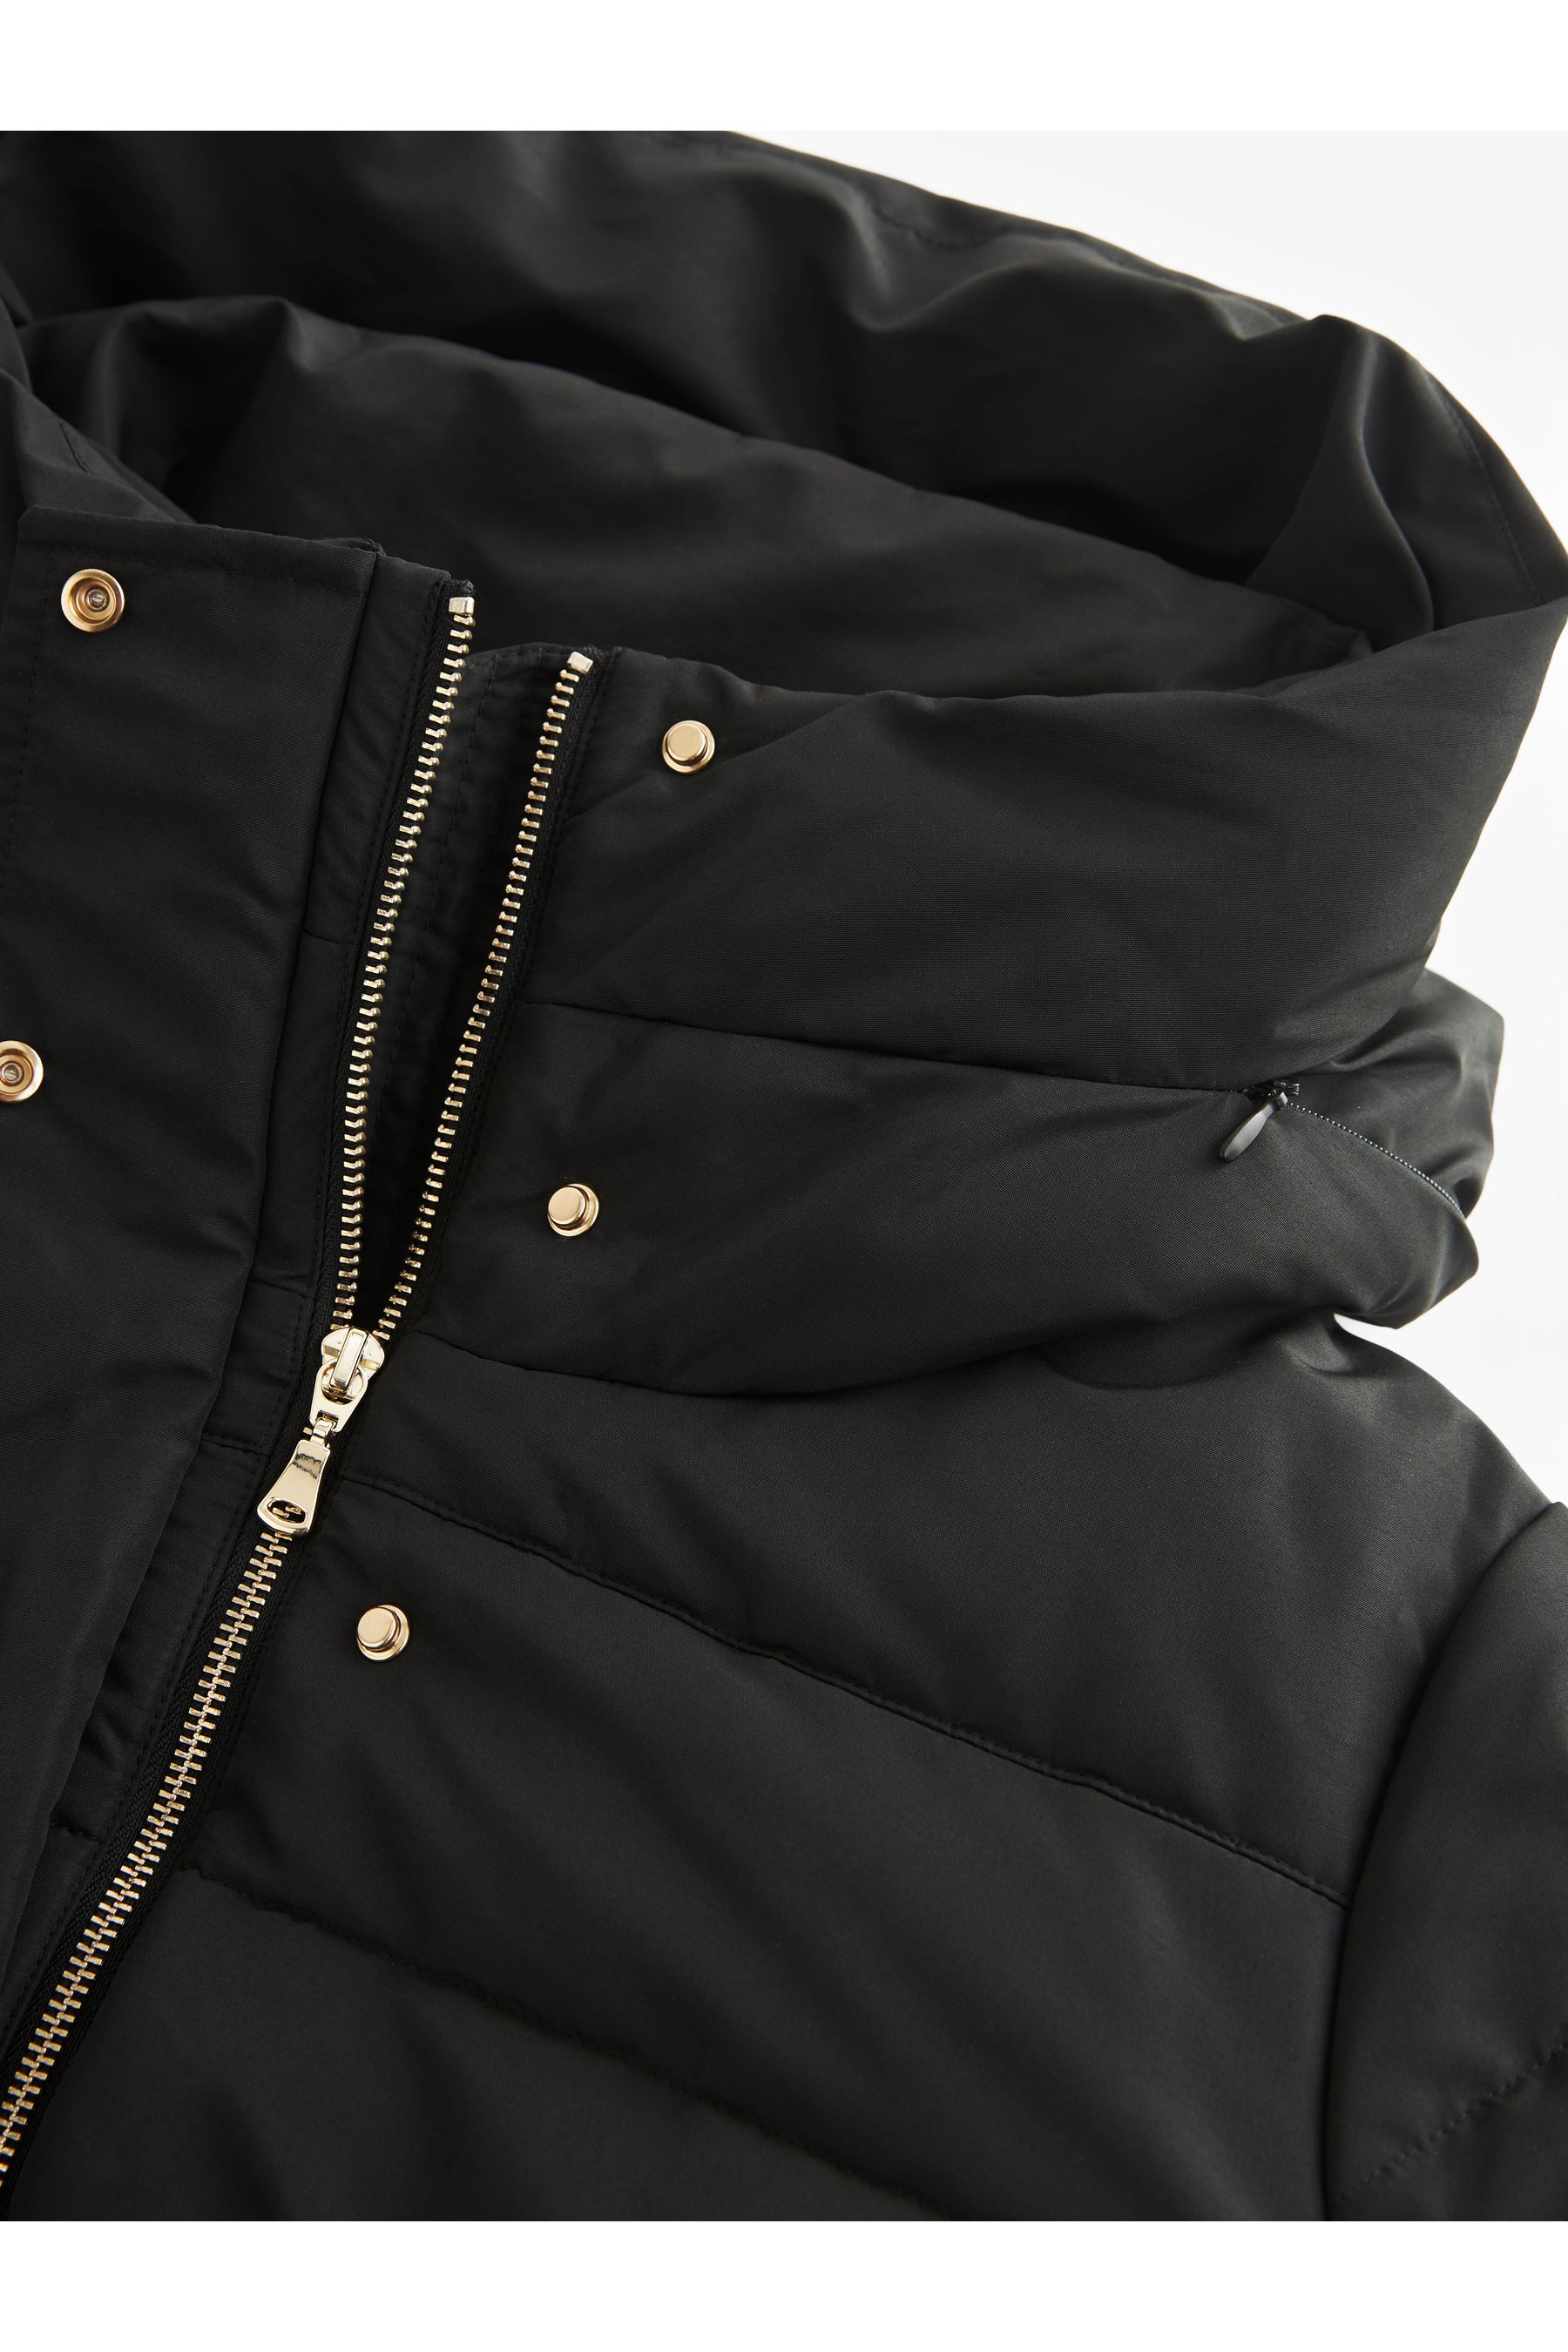 Buy Black Shower Resistant Padded Coat from the Next UK online shop